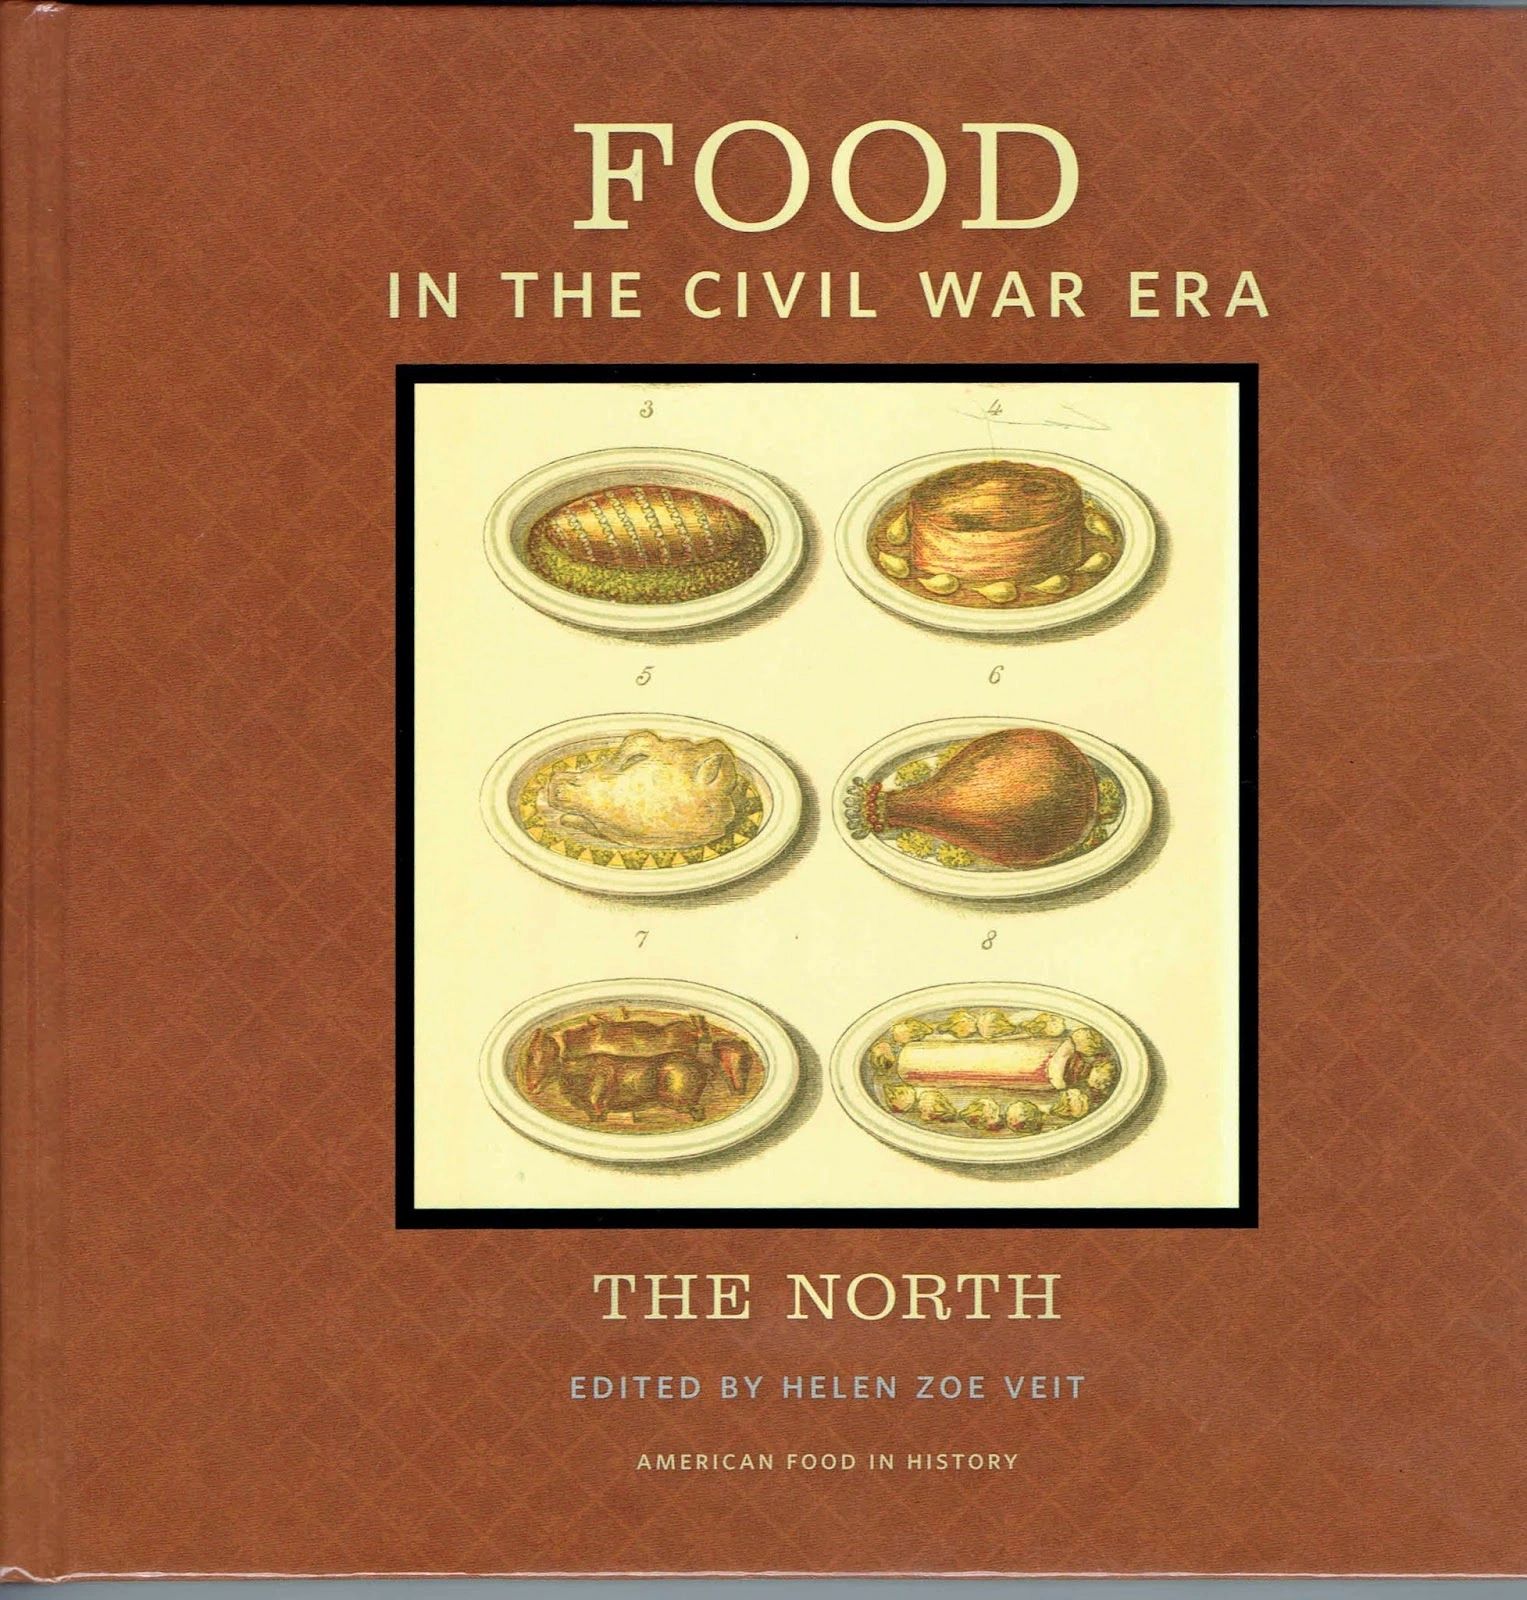 Food in the Civil War Era, The North by Helen Zoe Veit